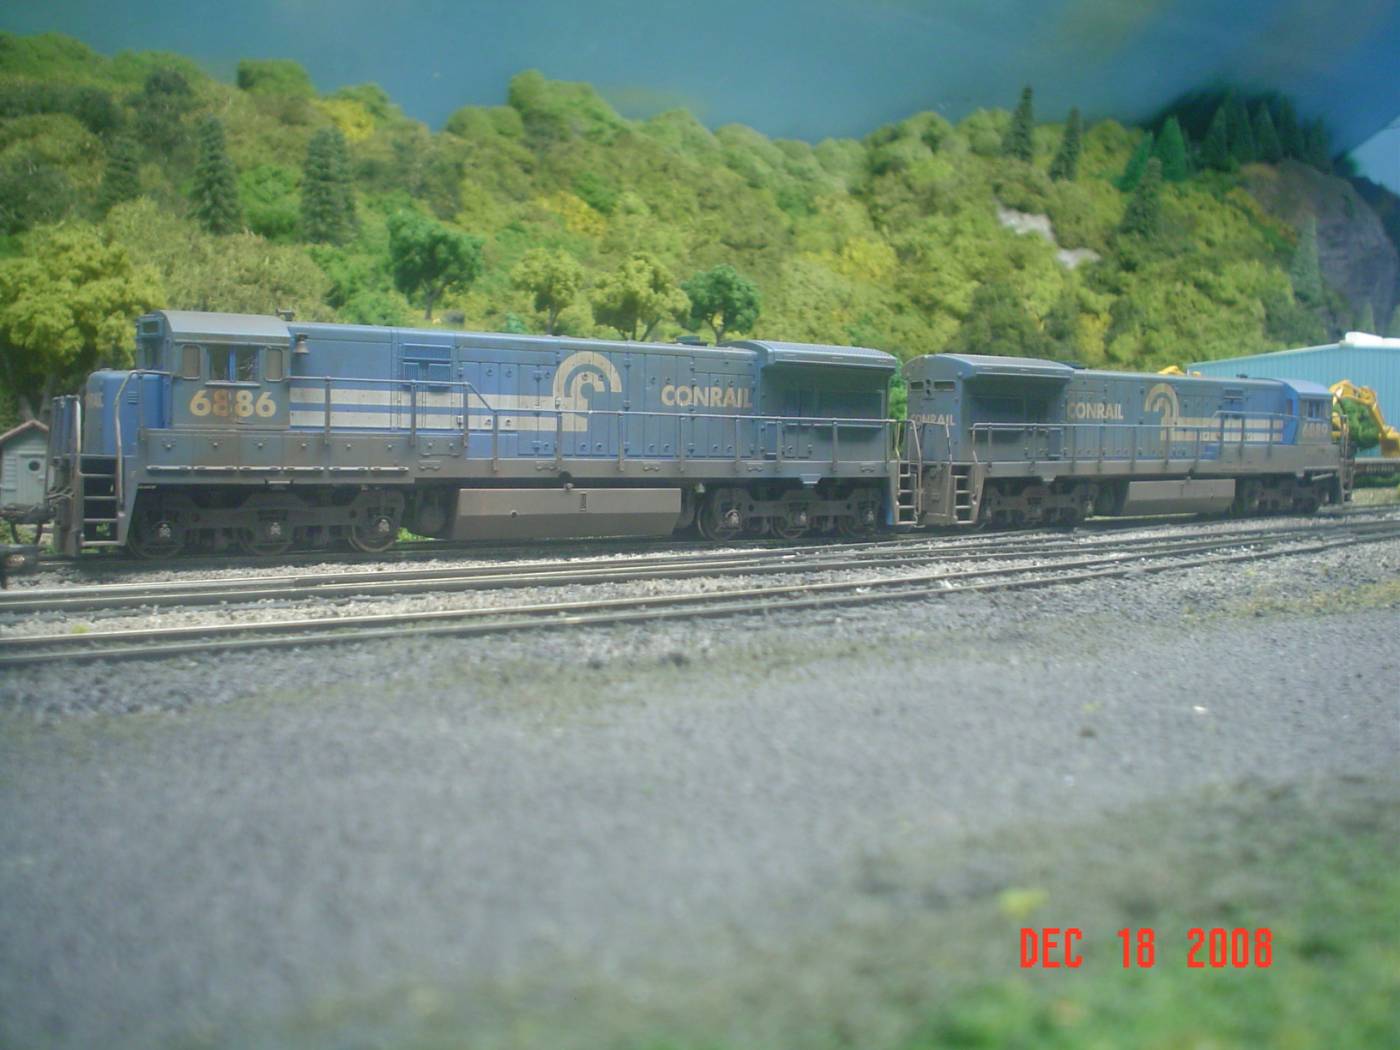 Misc locomotive shots